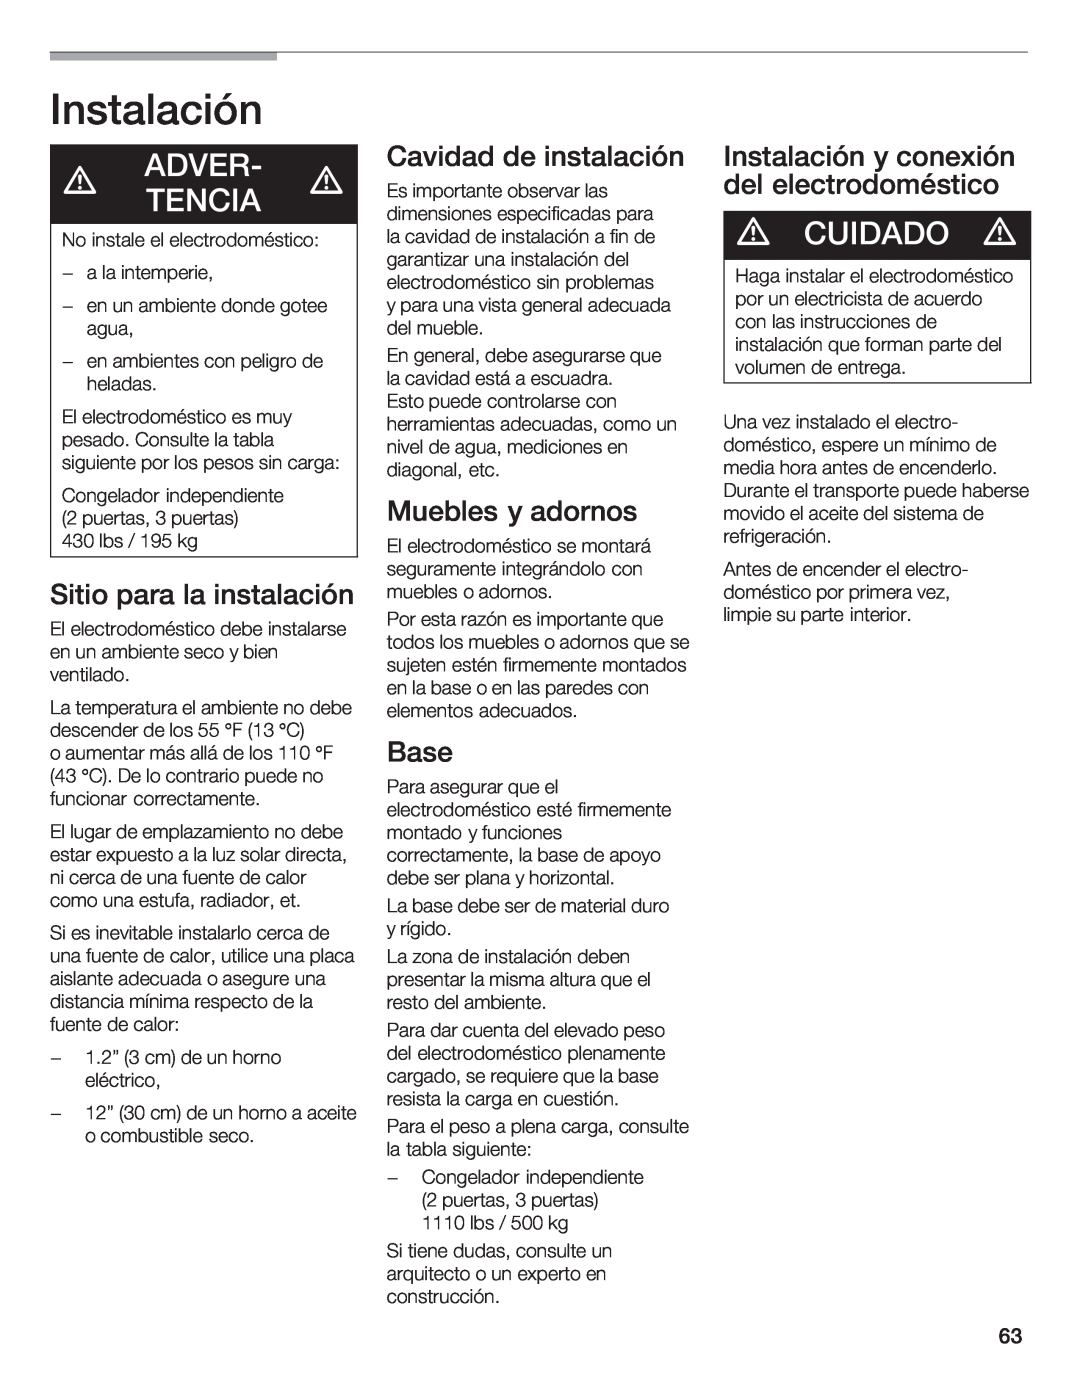 Bosch Appliances B36IB manual Adver, d CUIDADO, Tencia 